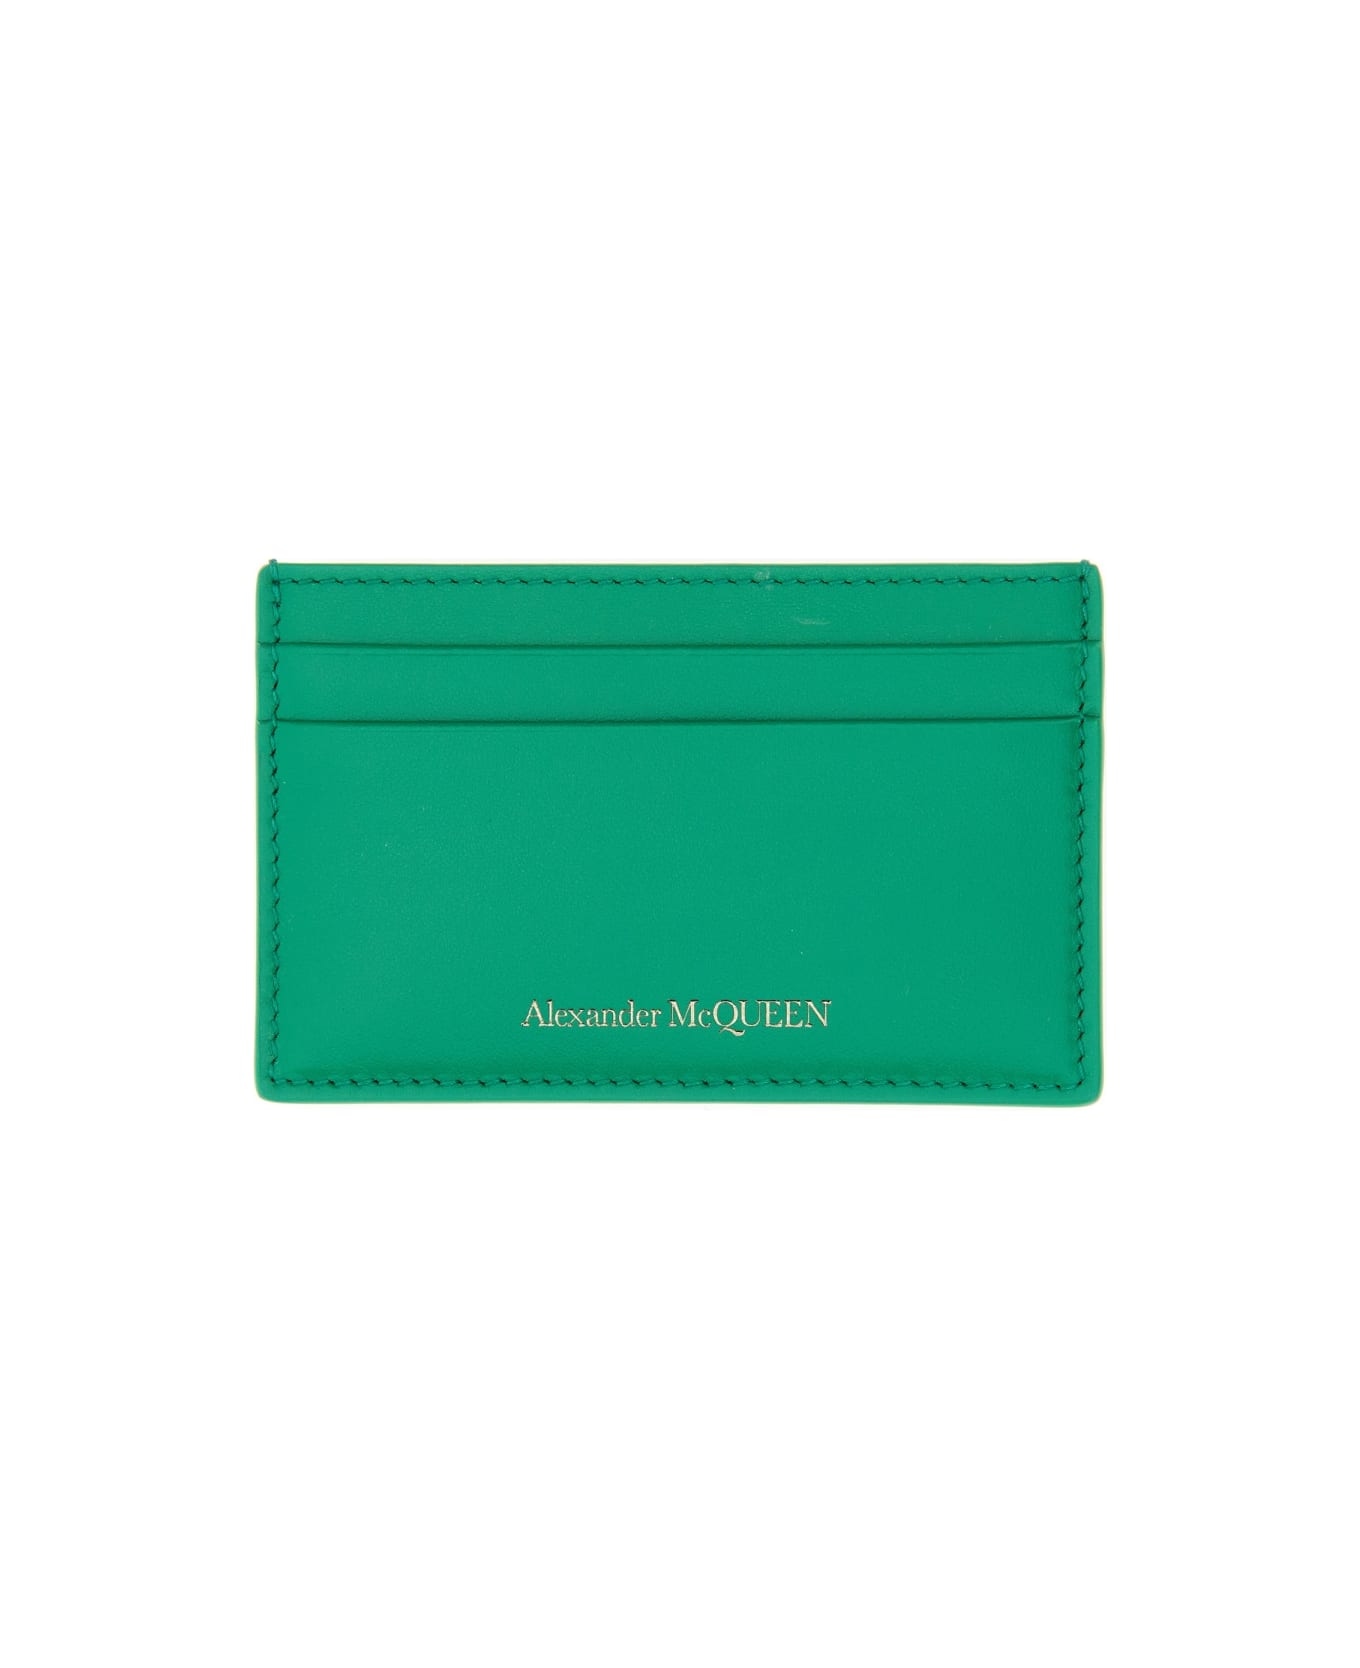 Alexander McQueen Leather Card Holder - GREEN